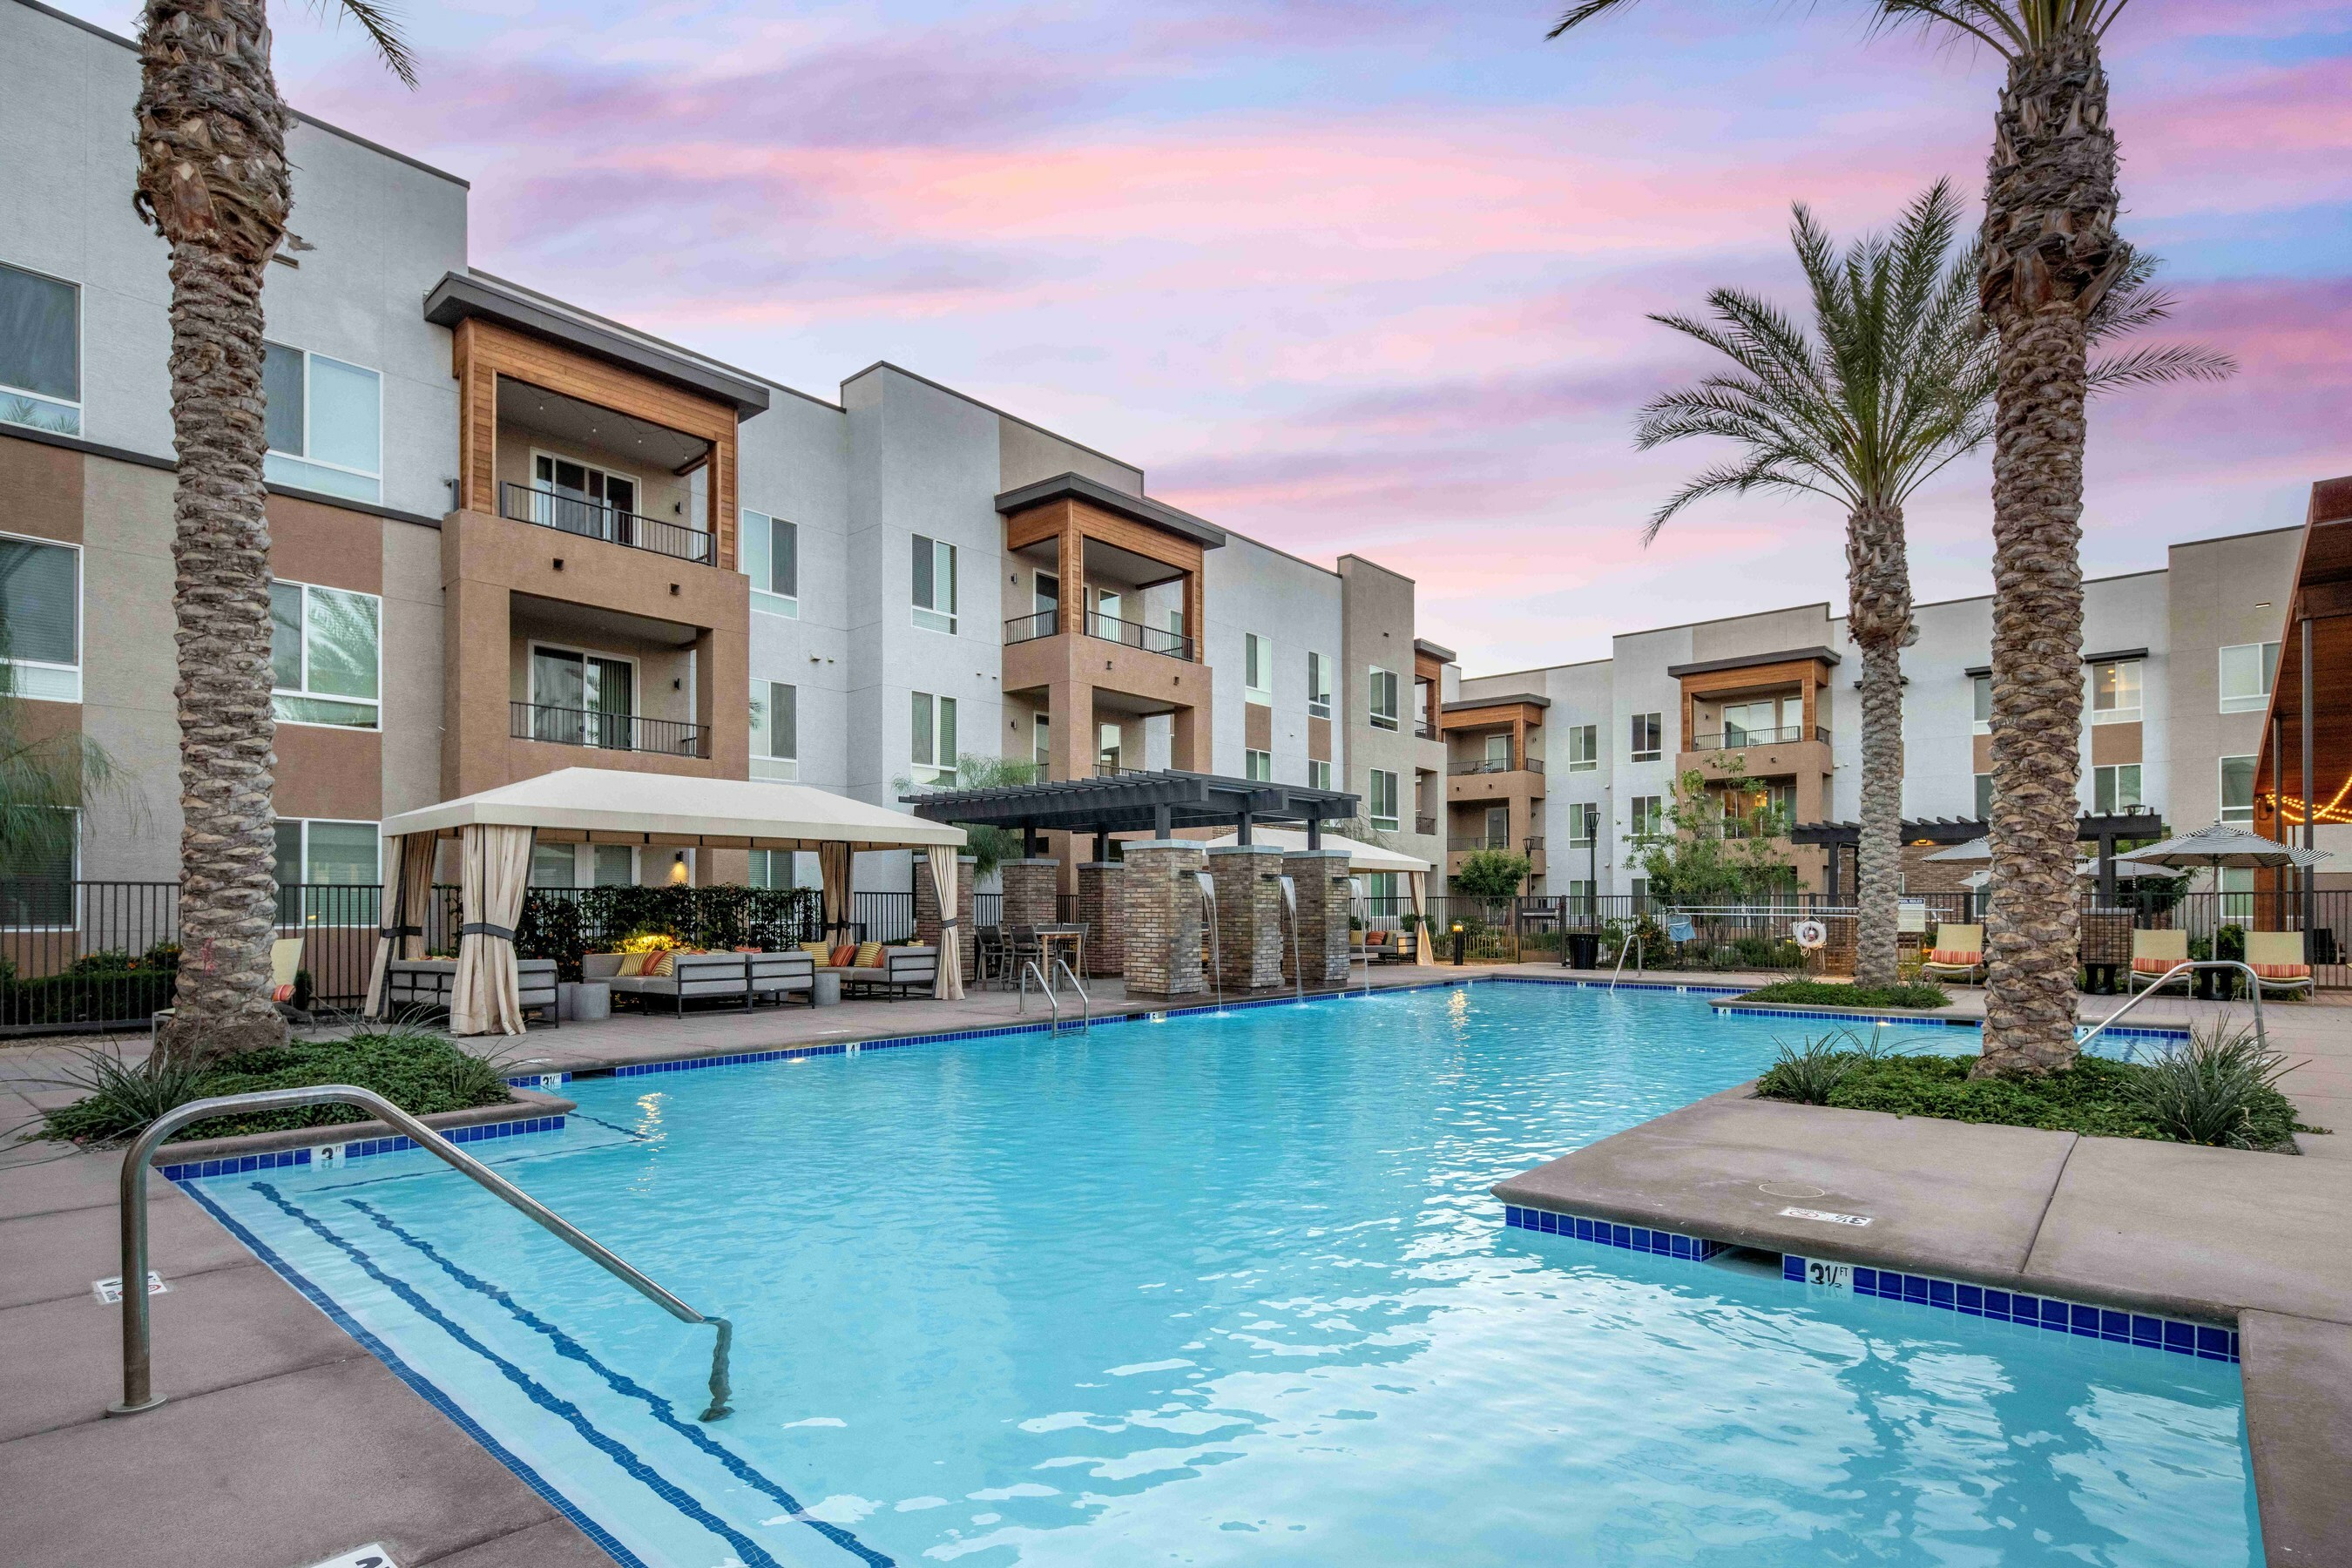 Olympus Property Adds to Arizona Multifamily Portfolio with 360-Unit Aiya Garden-Style Apartment Community in Phoenix Submarket